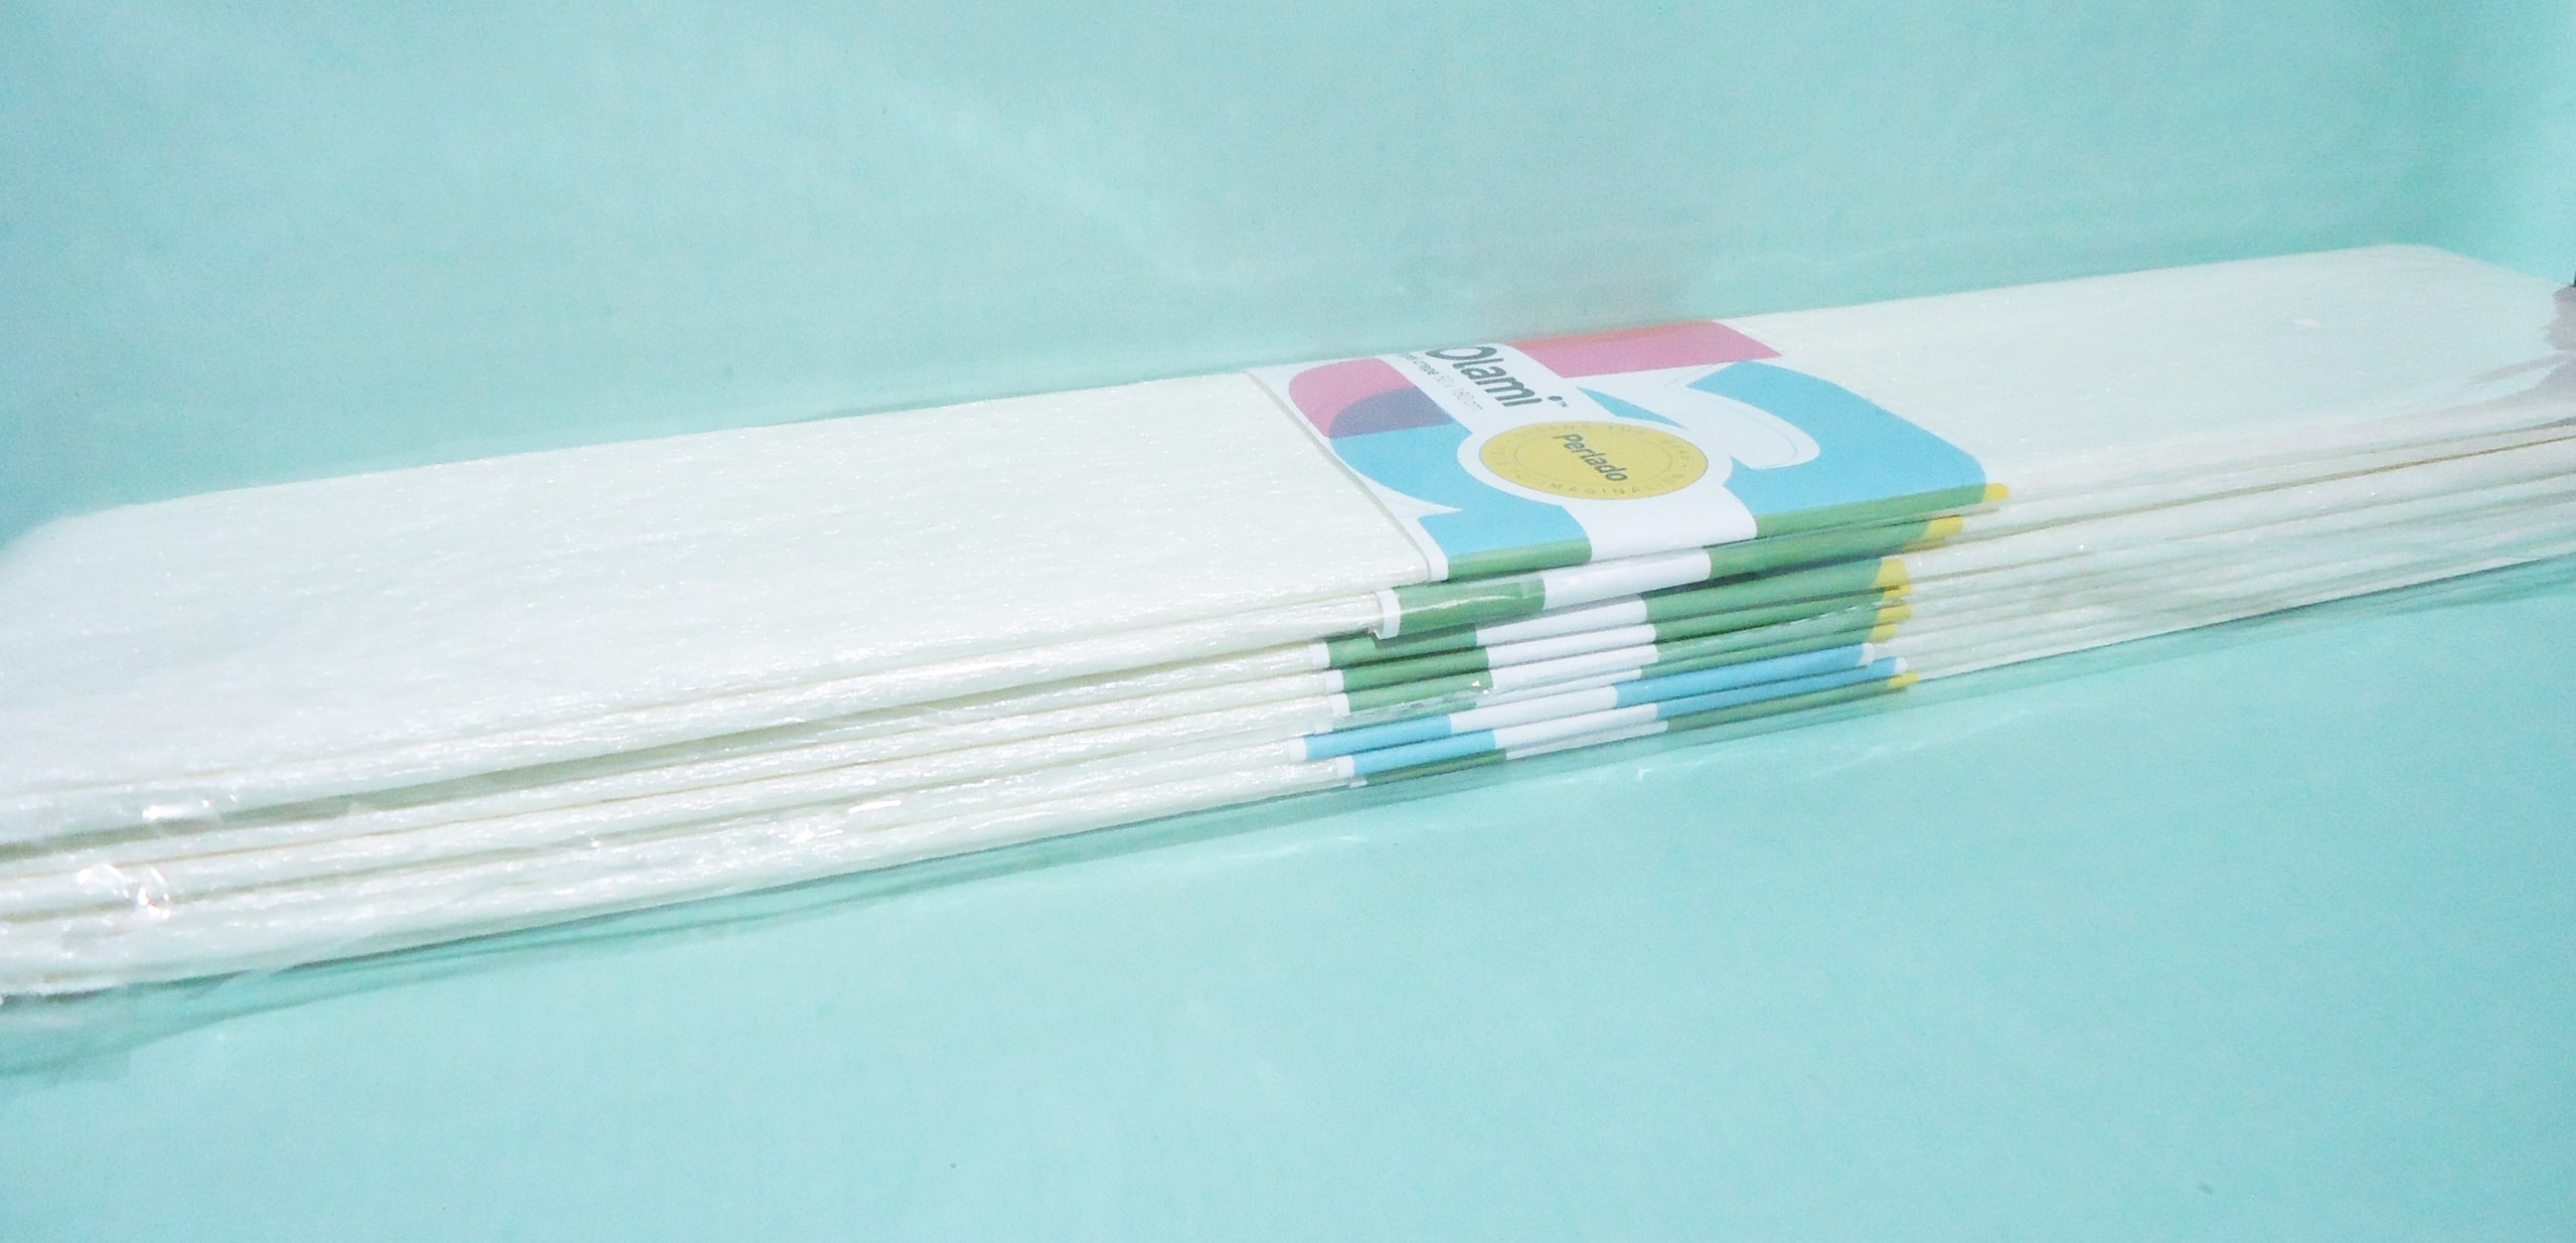 Papel Celofan Transparente x25 - Batik - Librería & Papelería